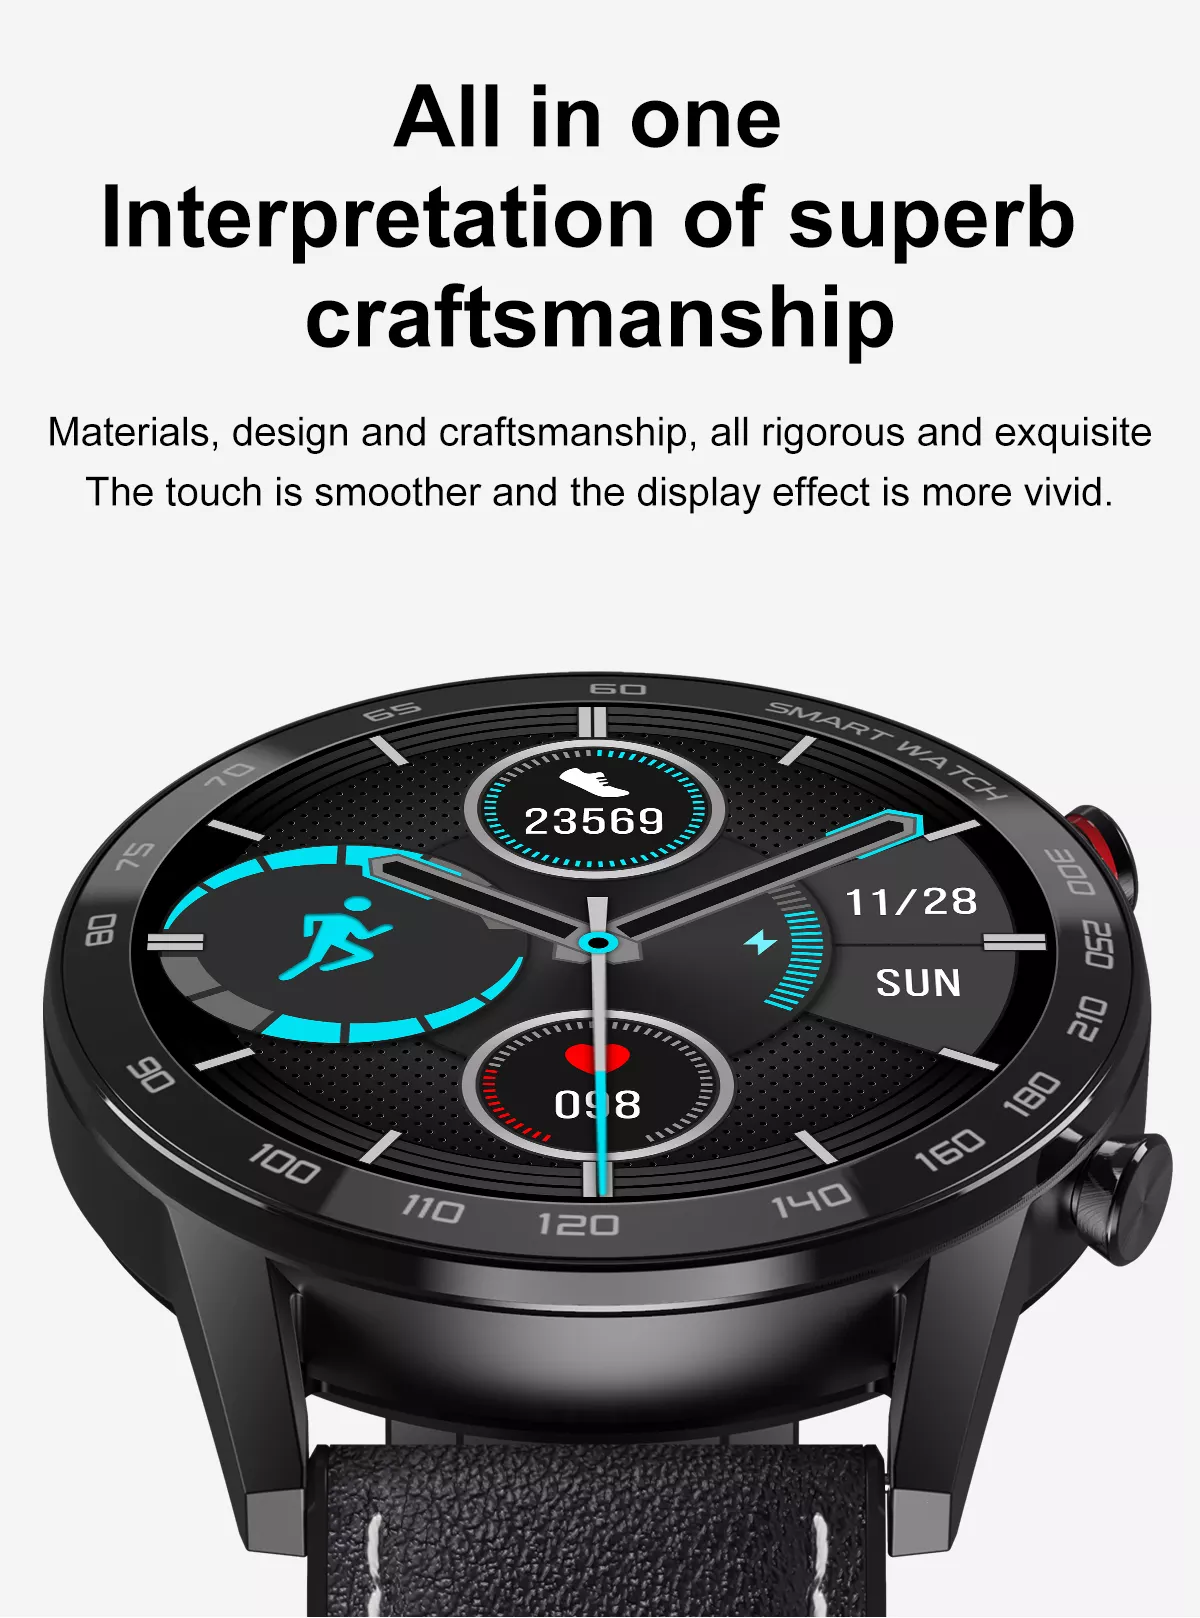 iS95 Smartwatch - ISPEKTRUM Smart Watch